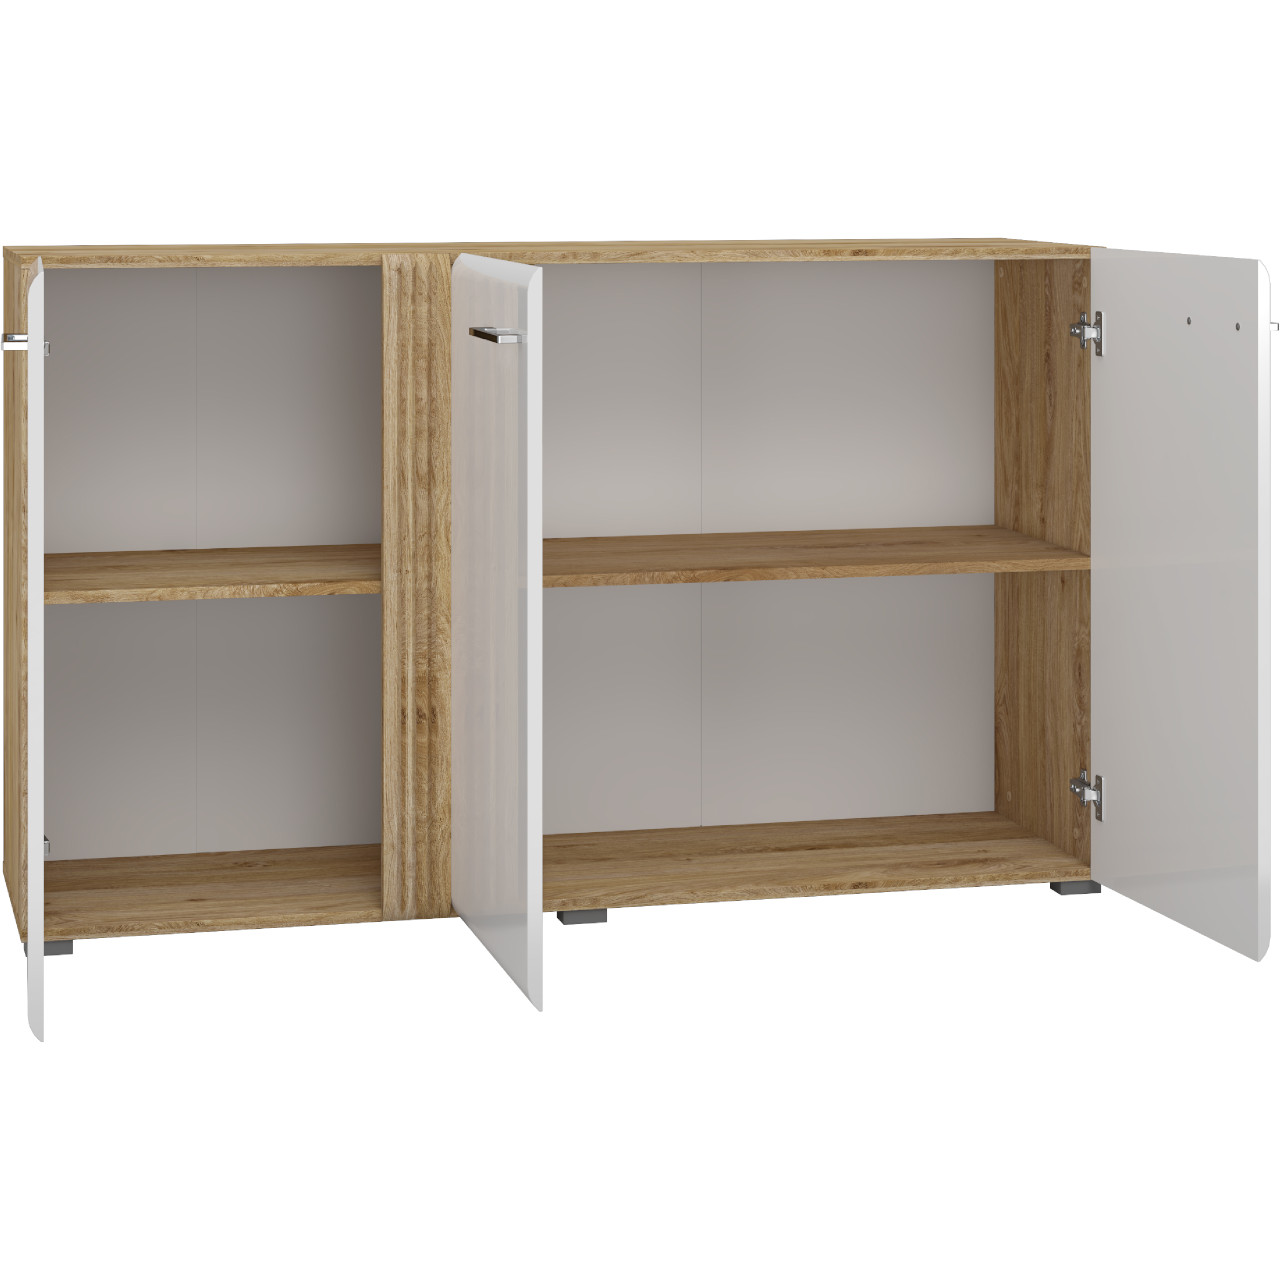 Storage cabinet FLORES FS05 castello oak / white gloss